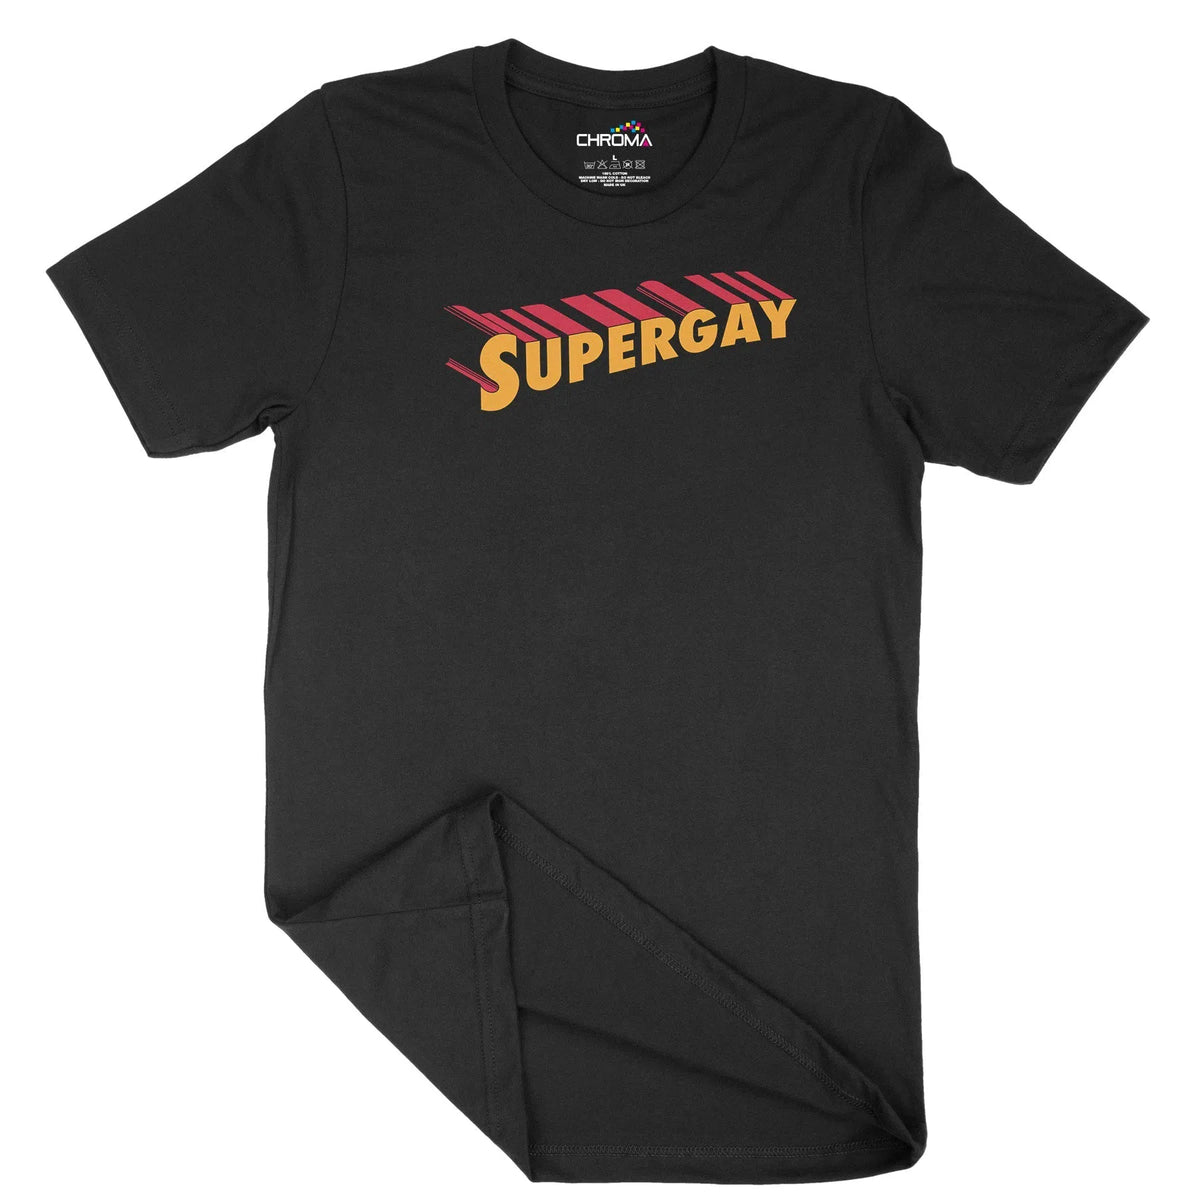 Supergay Lgbtq Unisex Adult T-Shirt | Quality Slogan Clothing Chroma Clothing